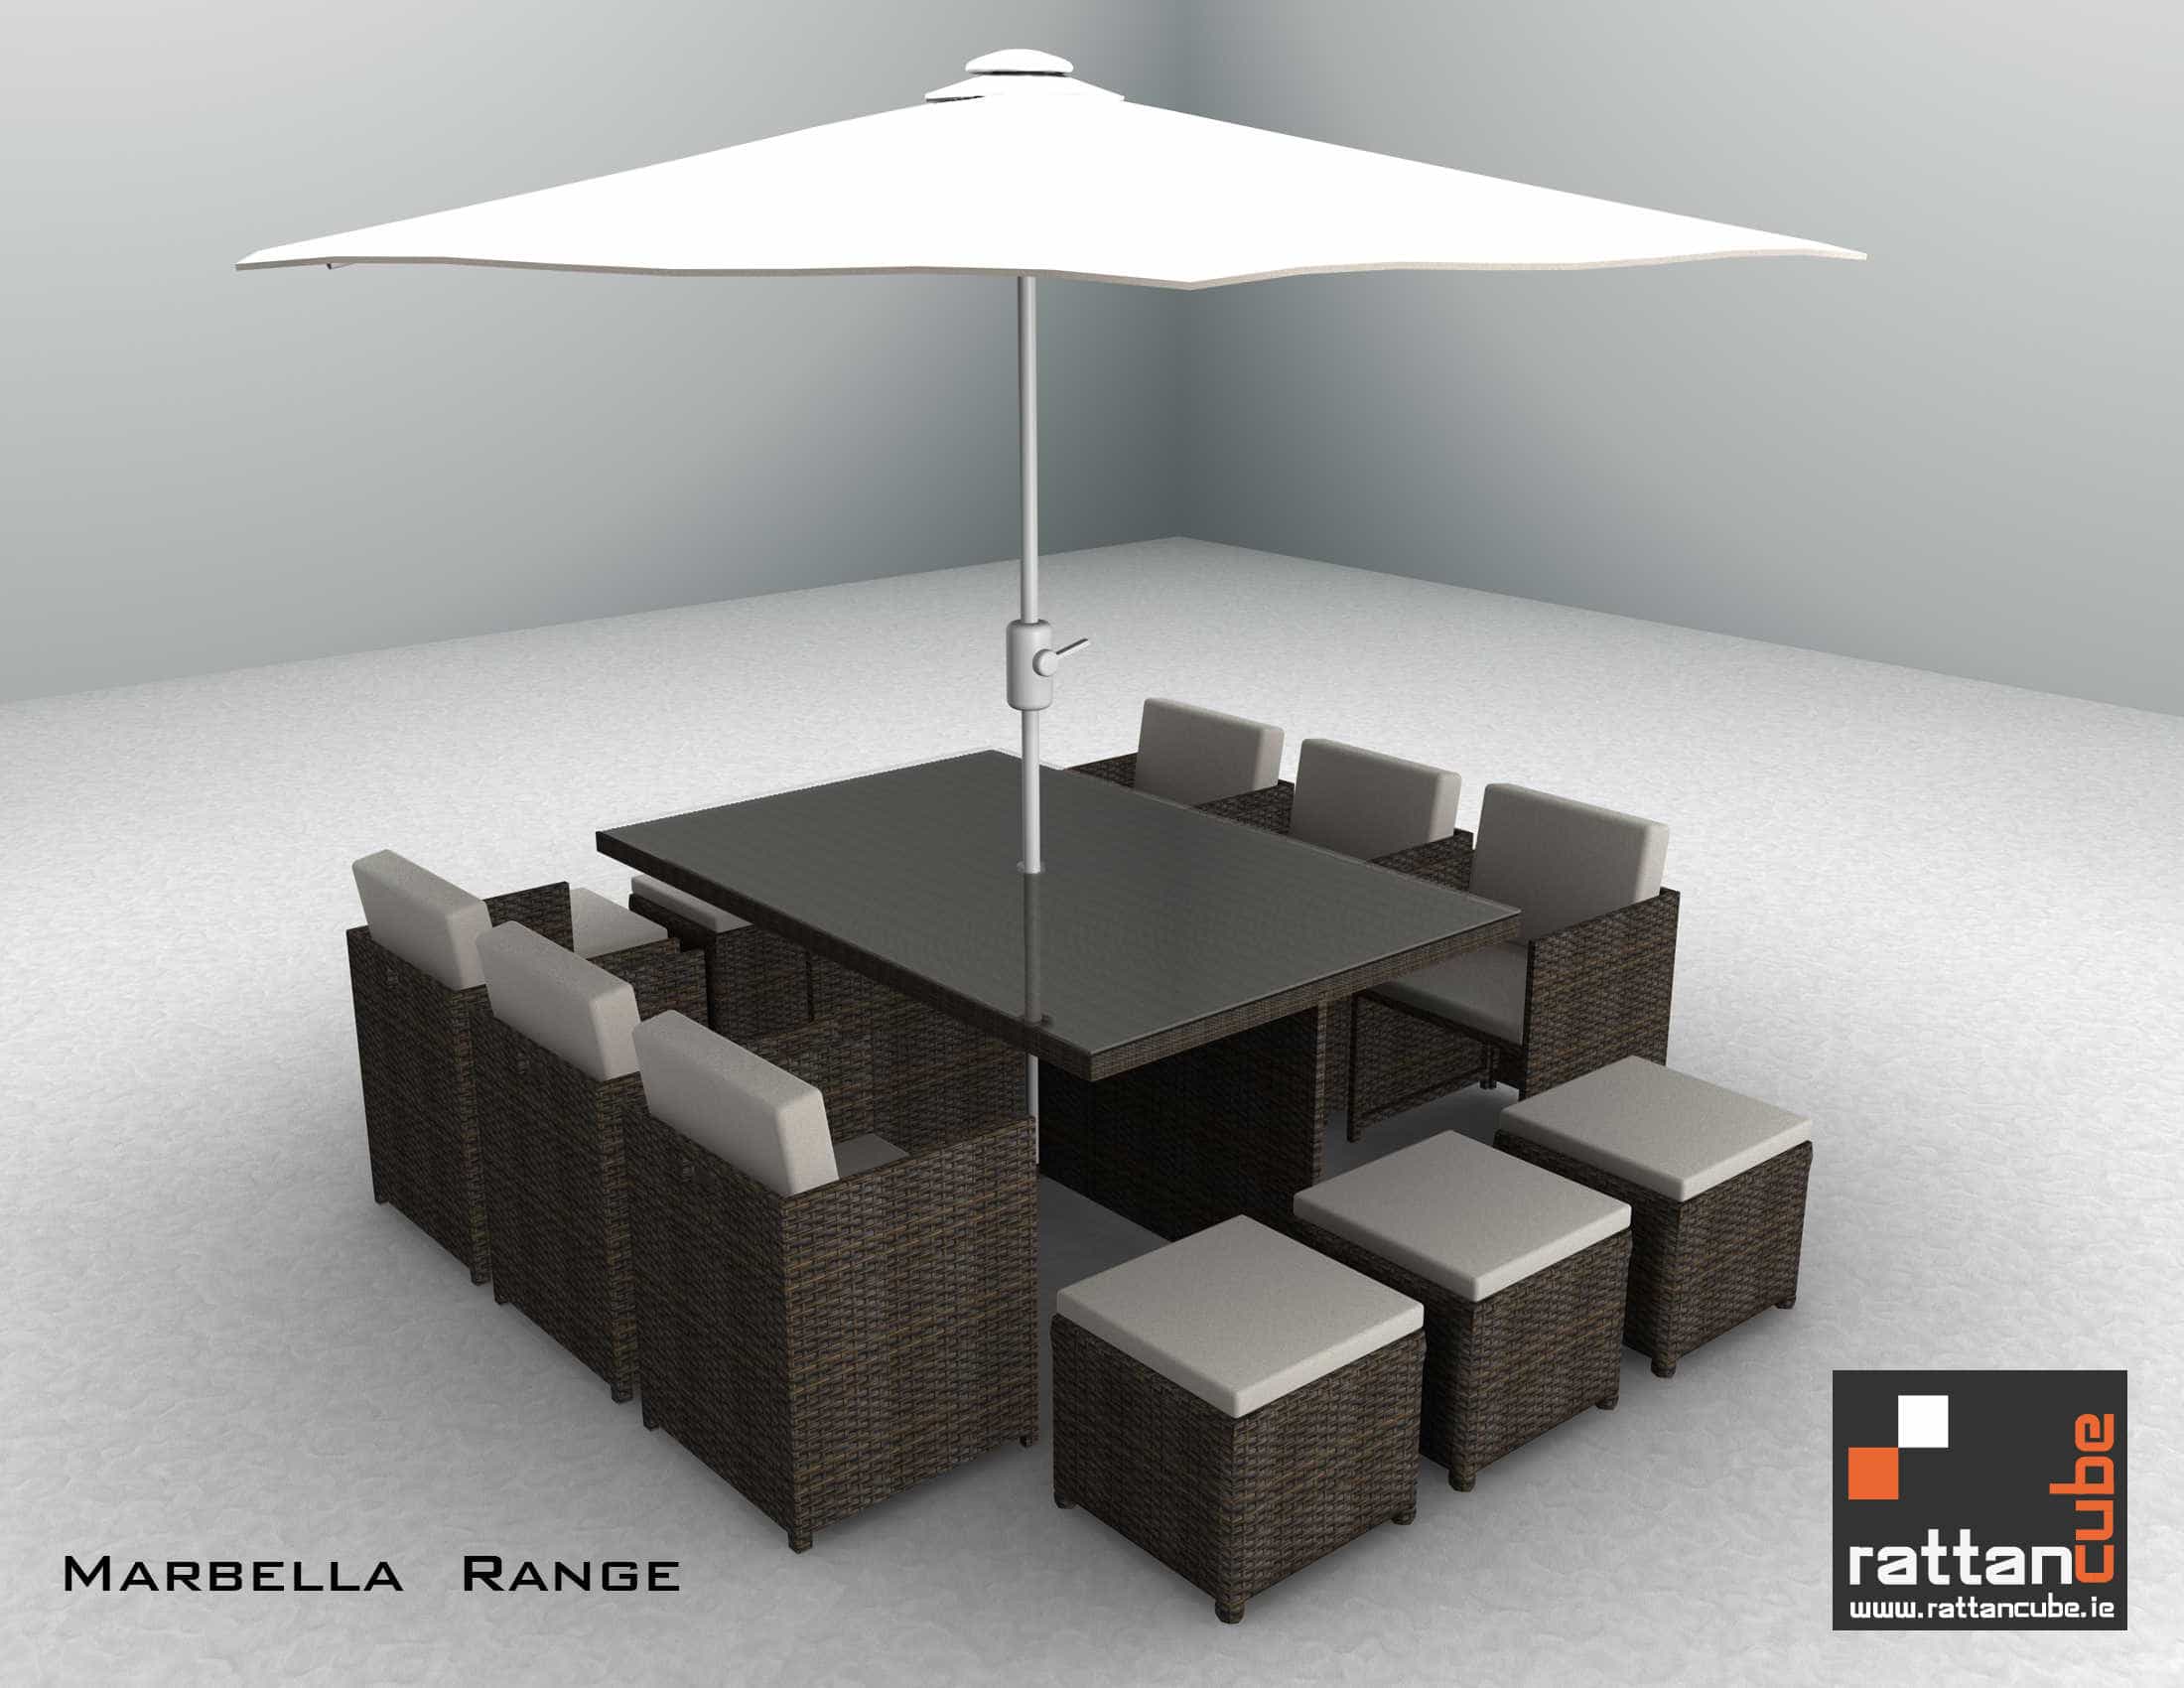 rattan furniture dublin marbella range